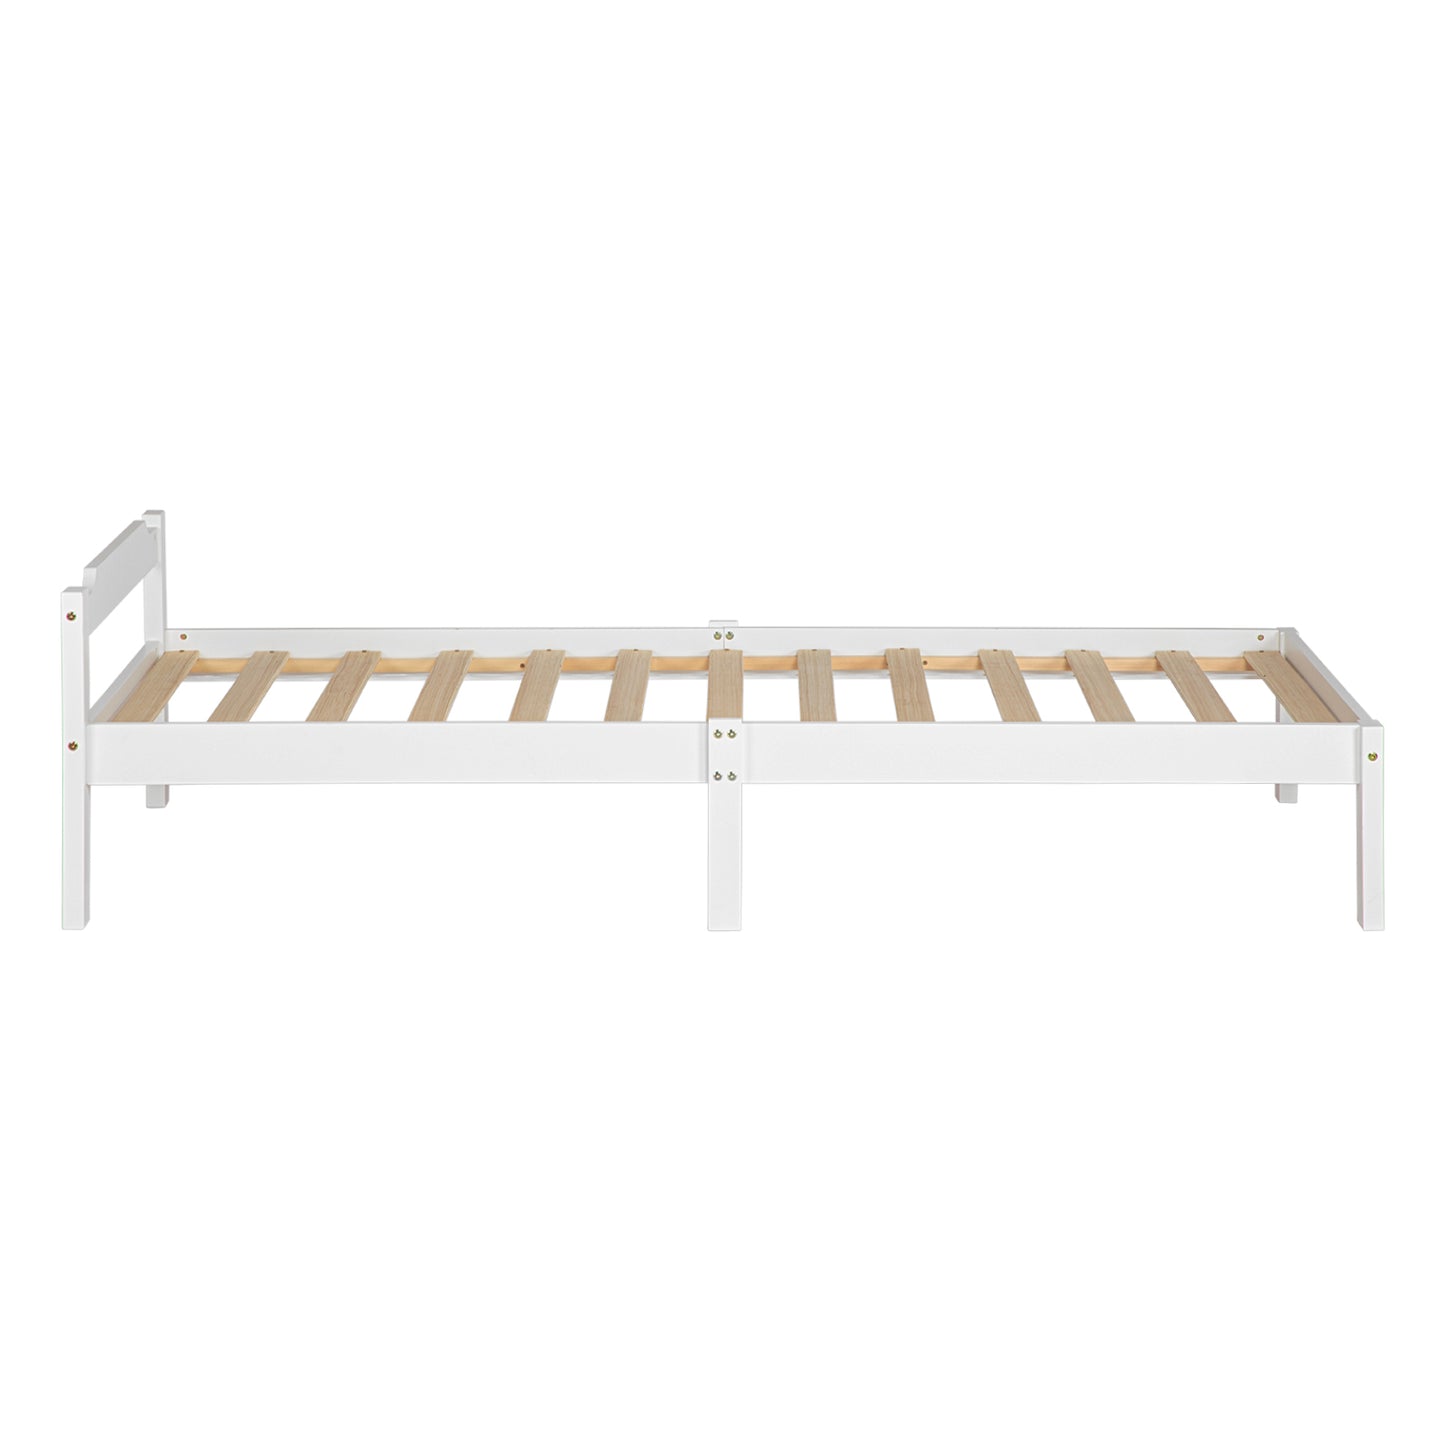 PONT Single Pine Wooden Bed 98*196cm - White